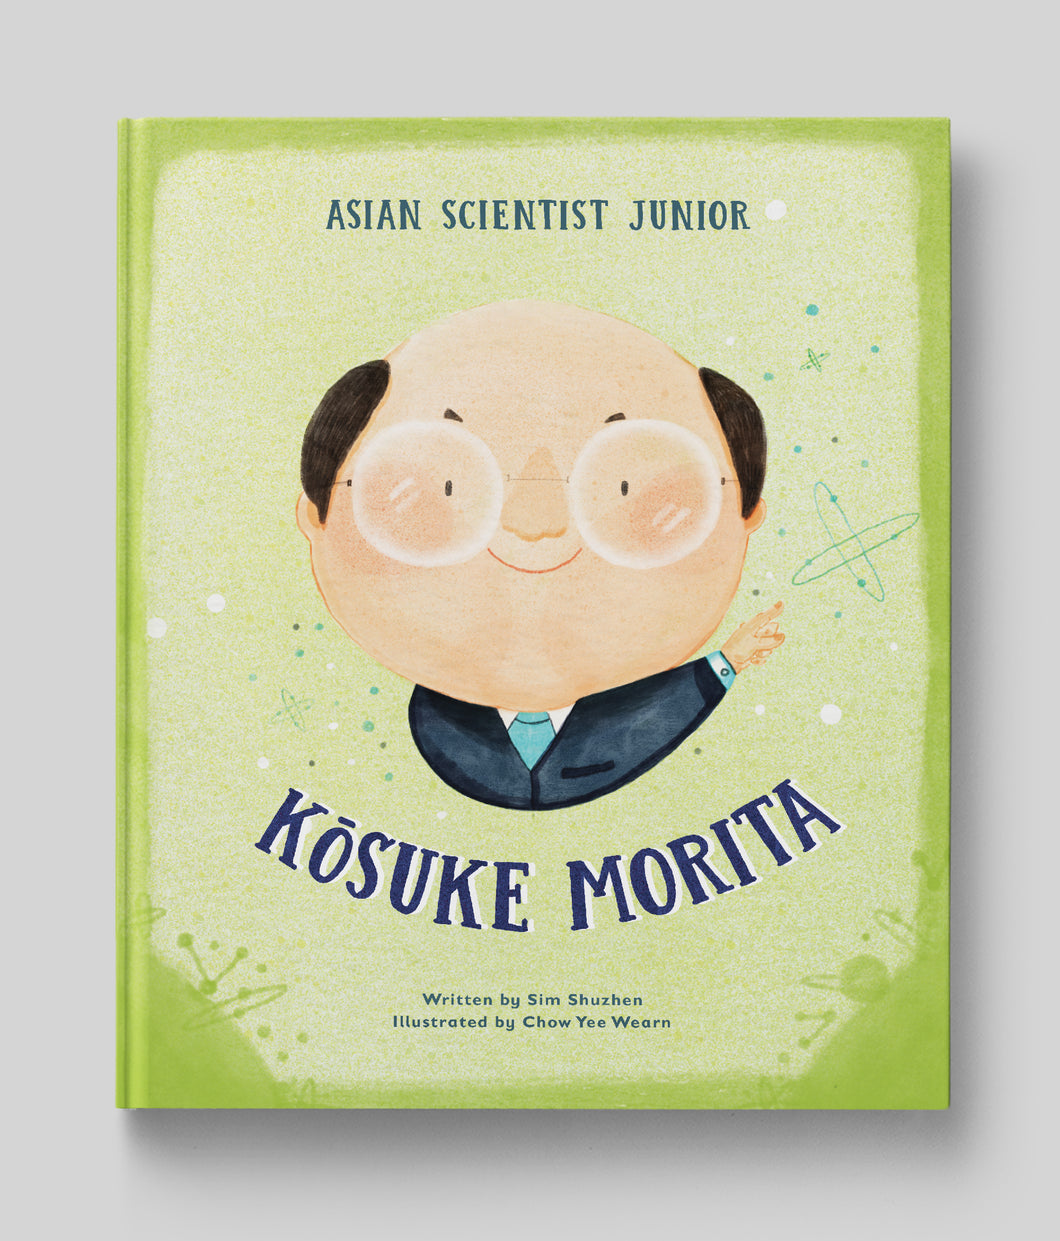 Asian Scientist Junior: Kōsuke Morita